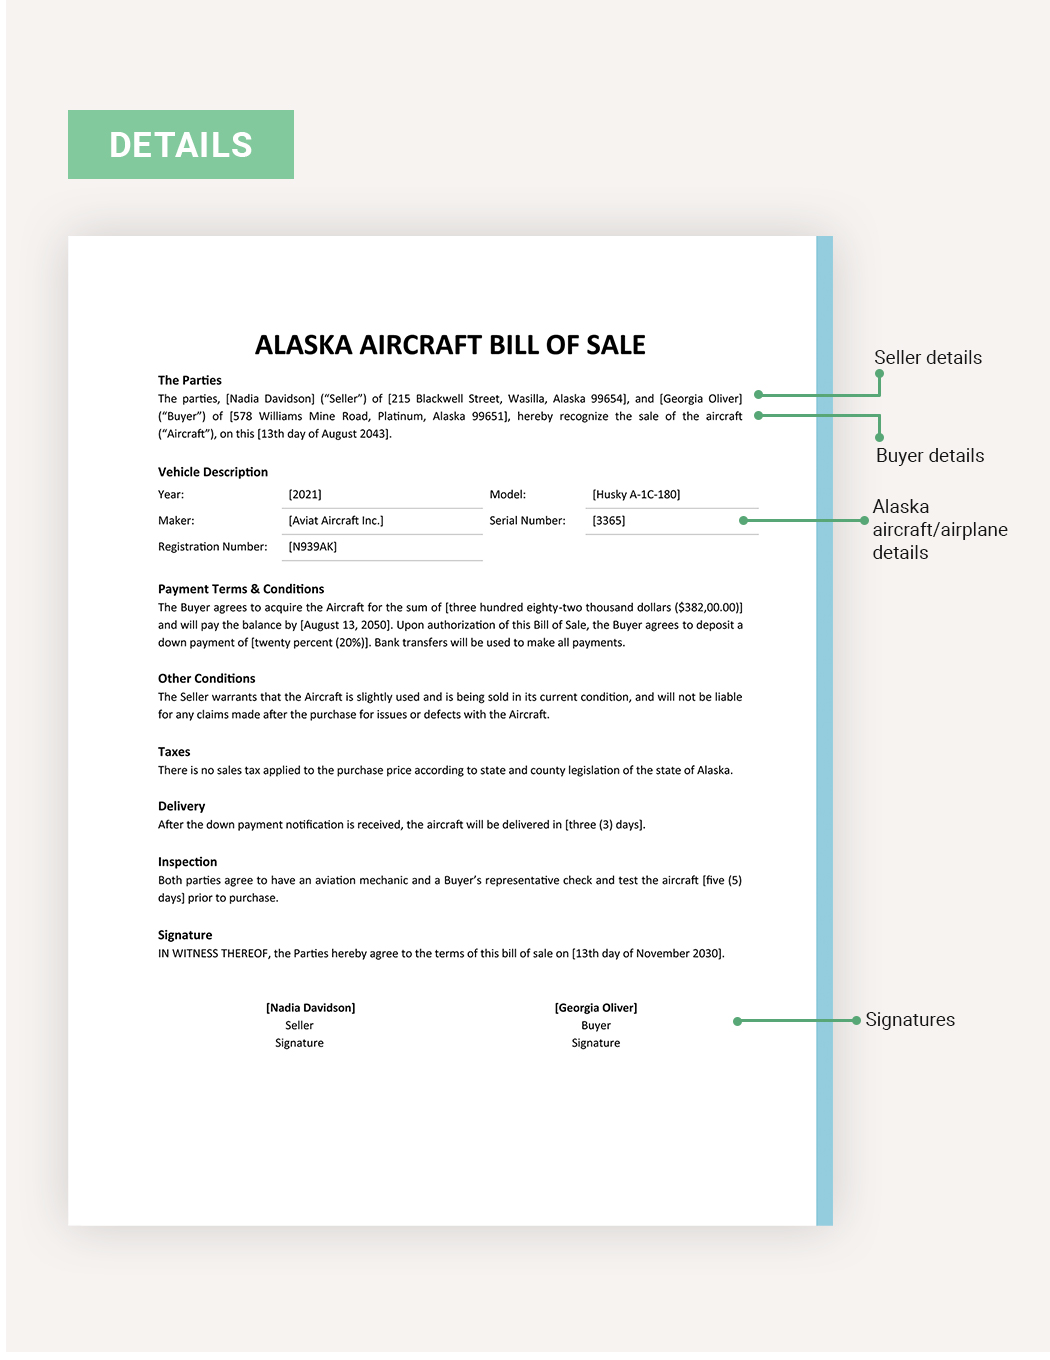 Alaska Aircraft / Airplane Bill Of Sale Template